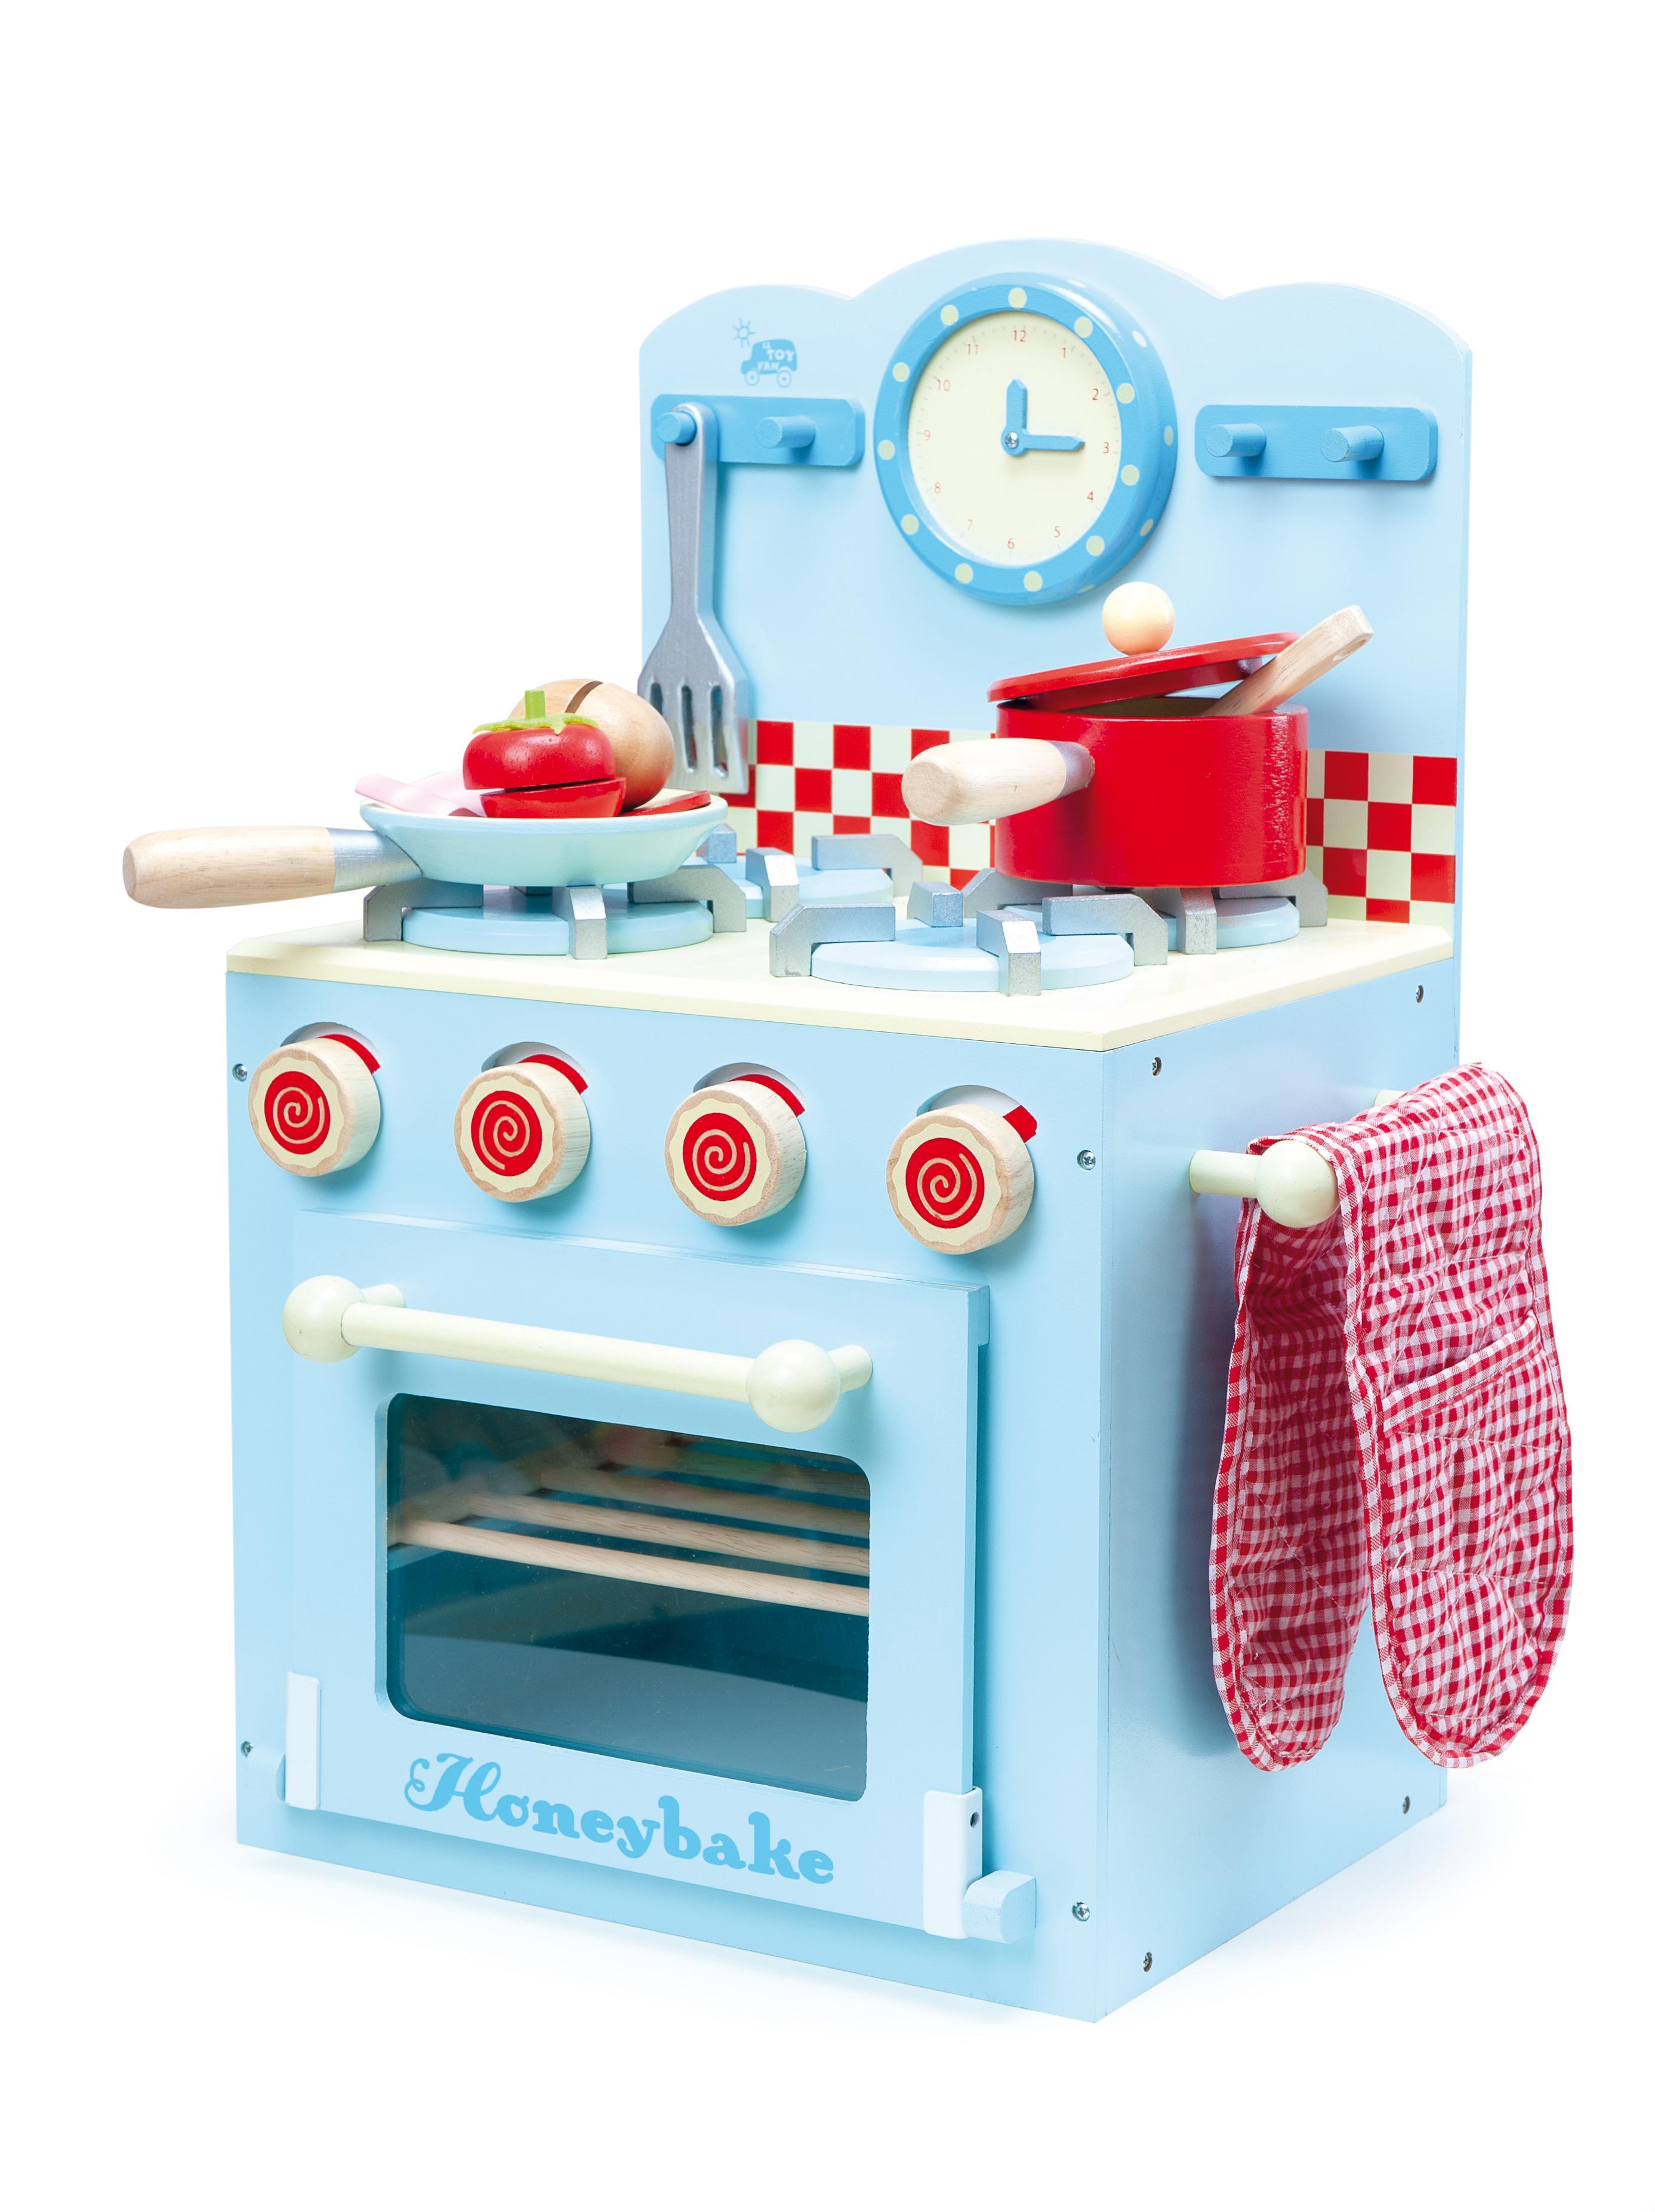 Foto Le Toy Van Honeybake Oven and Hob Set